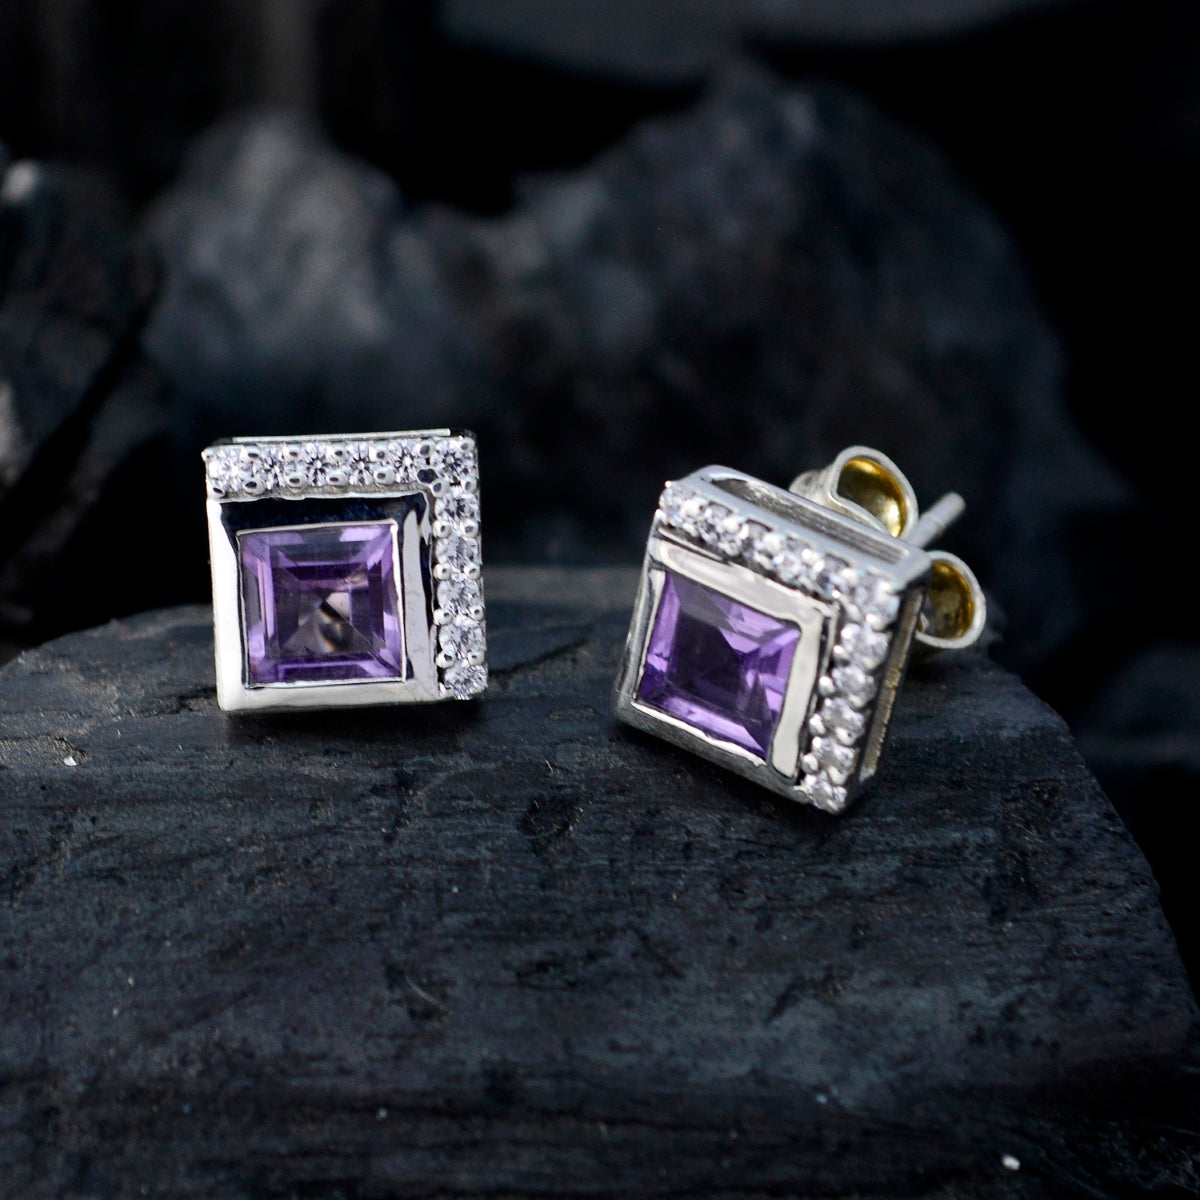 Riyo Real Gemstones square Faceted Purple Amethyst Silver Earring college graduation